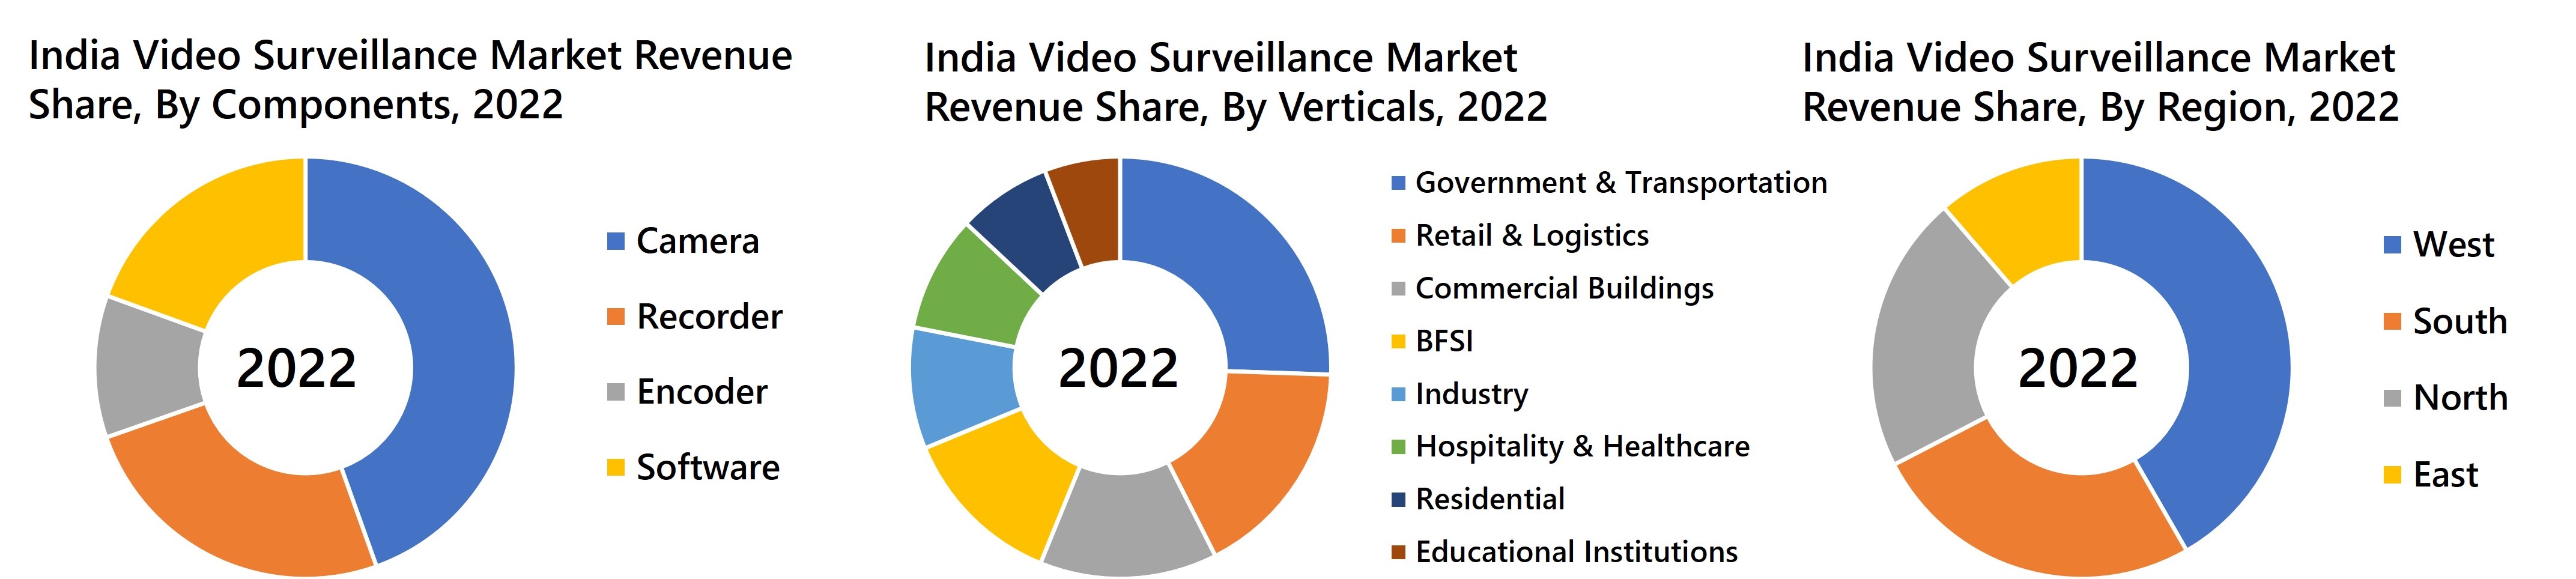 India Video Surveillance Market Revenue Share